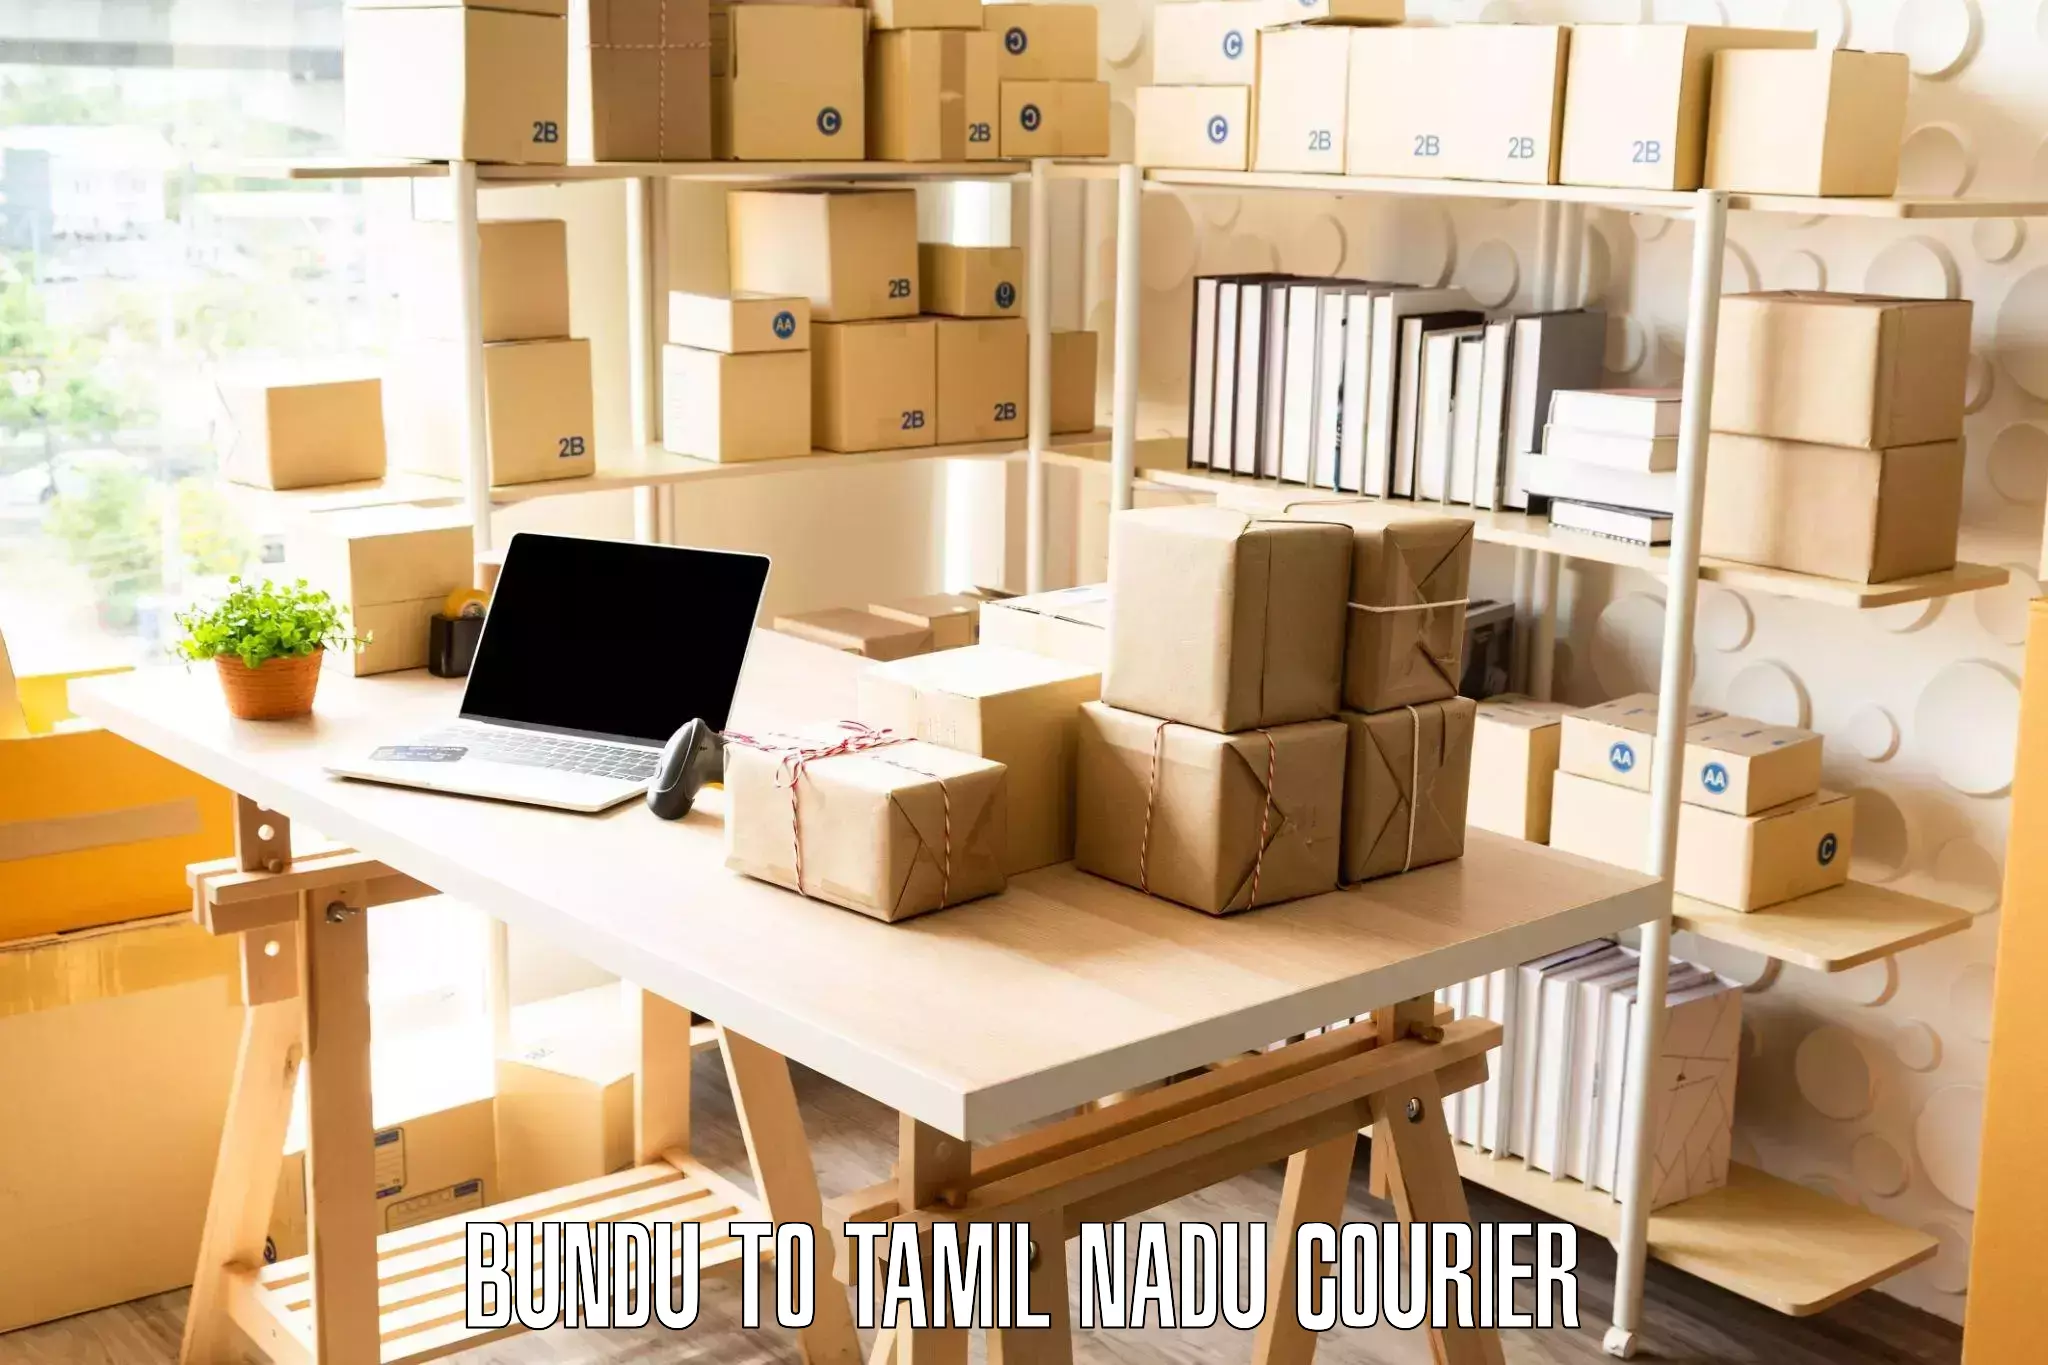 Furniture logistics Bundu to Tamil Nadu